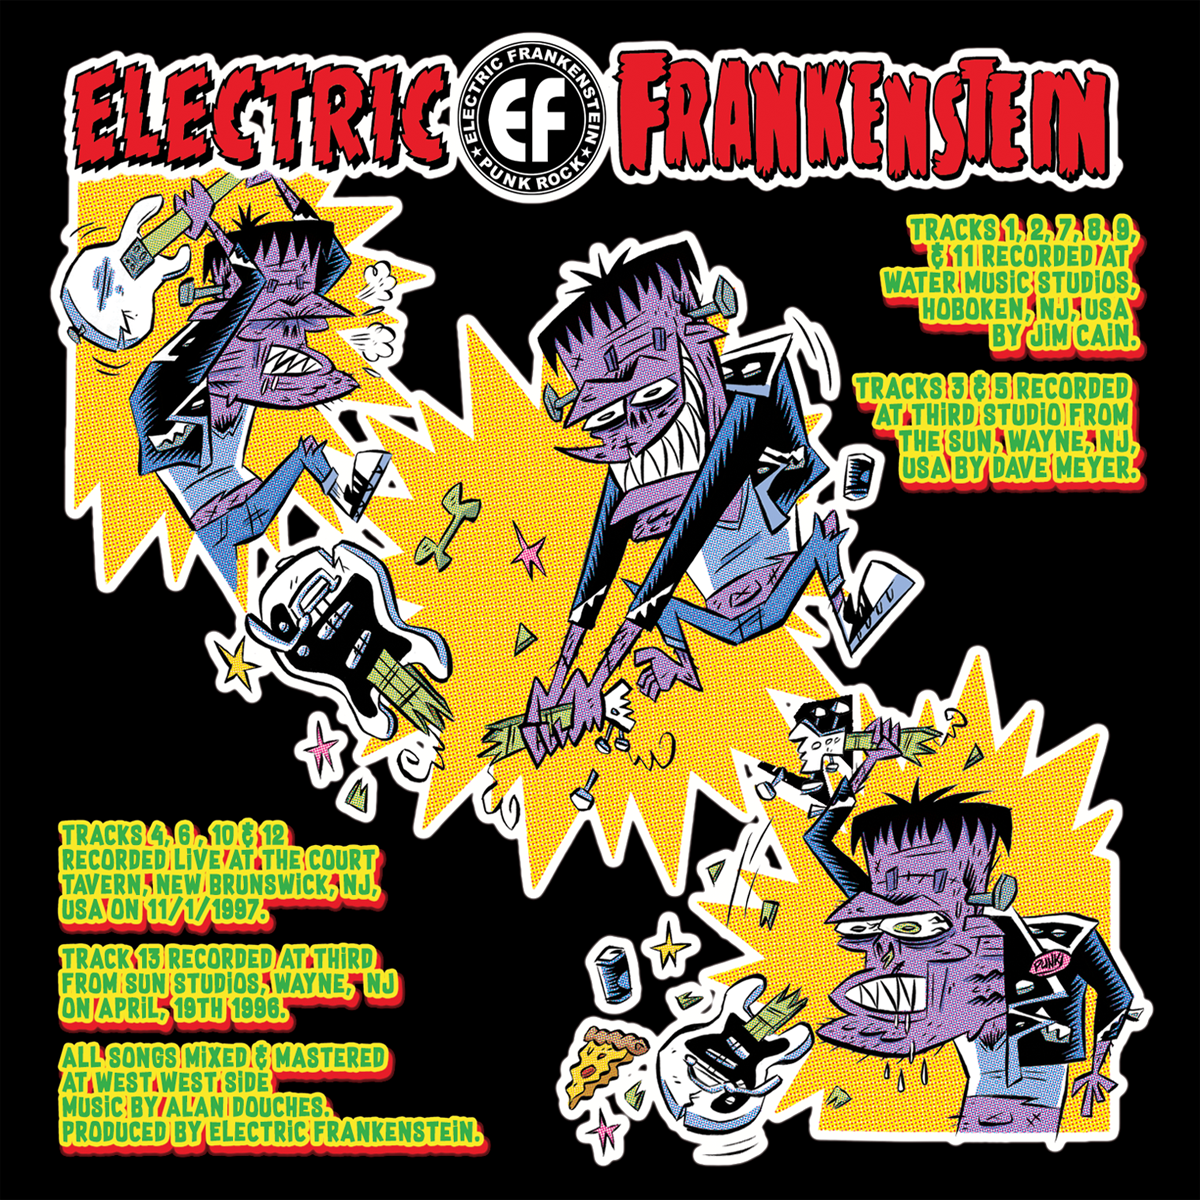 Electric Frankenstein- Rock ‘N Roll Monster (Revisited) CD ~REISSUE: EXPANDED EDITION W/ 3 BONUS TRACKS!